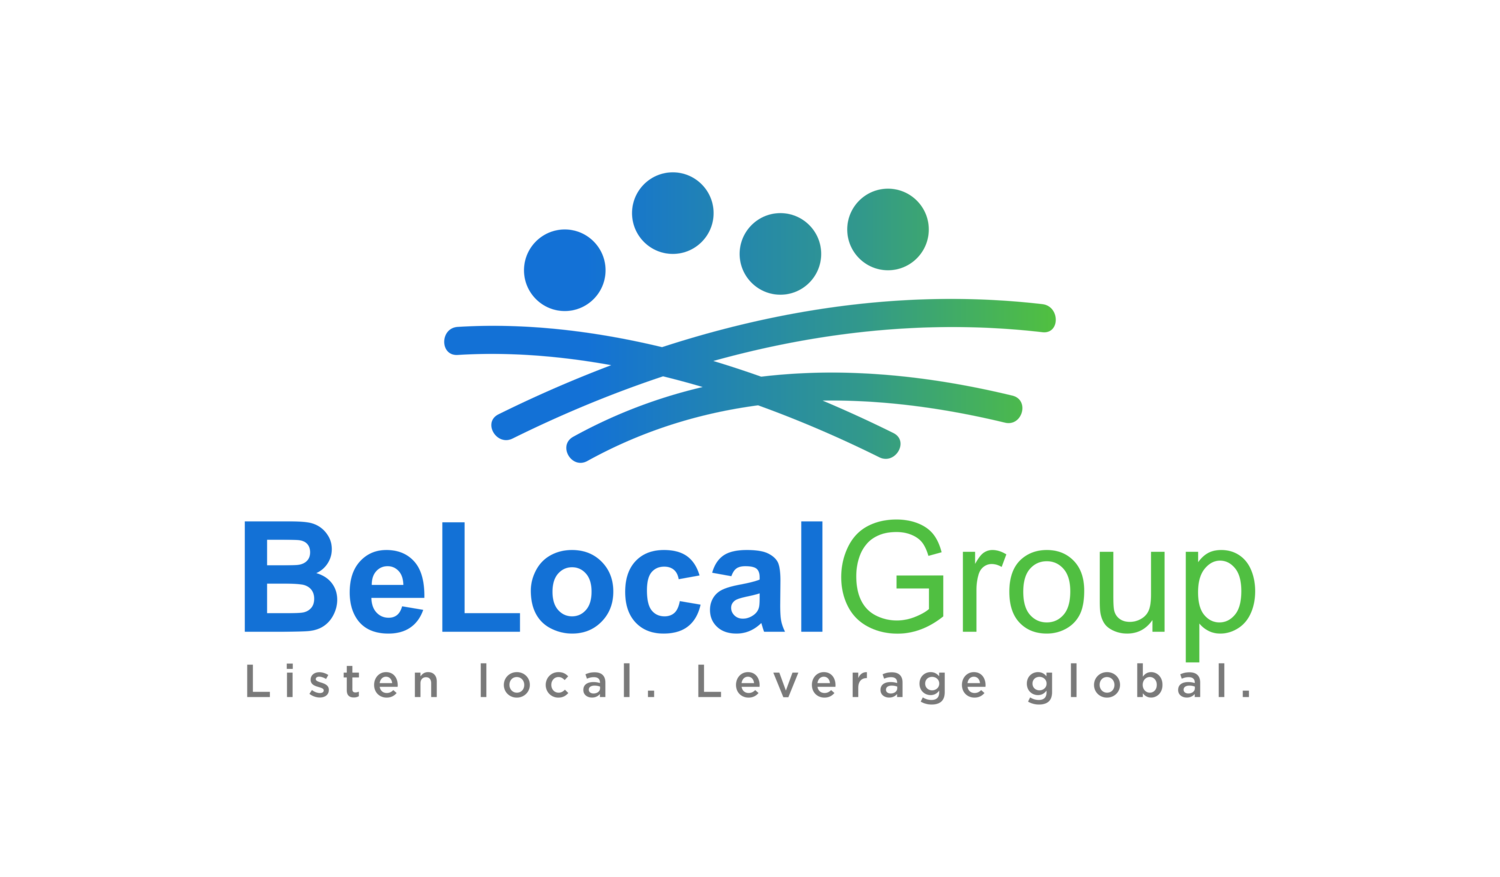 BeLocal Group